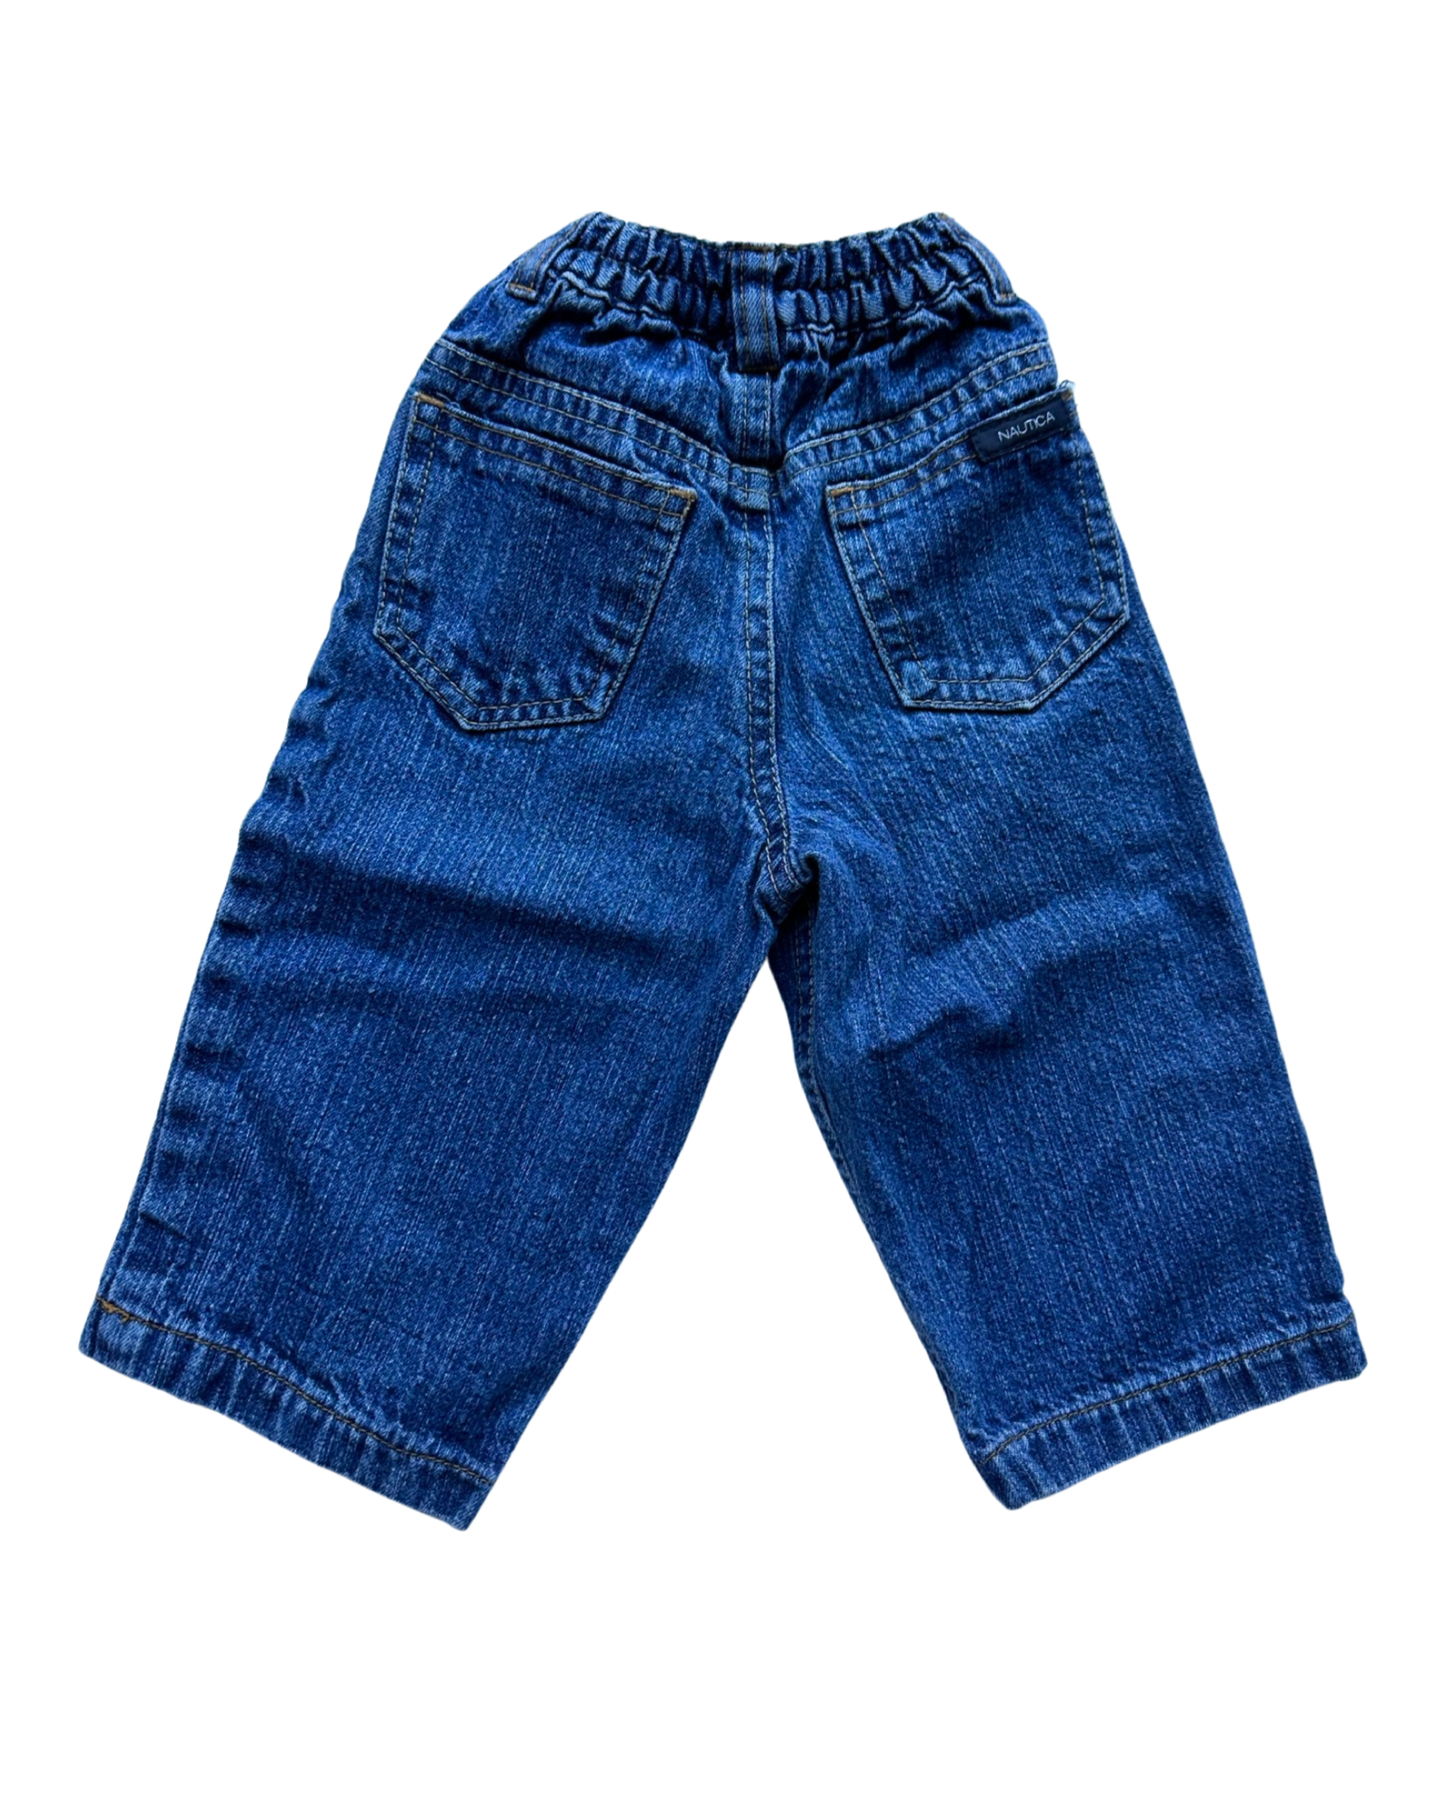 Nautica 90s mid wash vintage jeans (9-12mths)